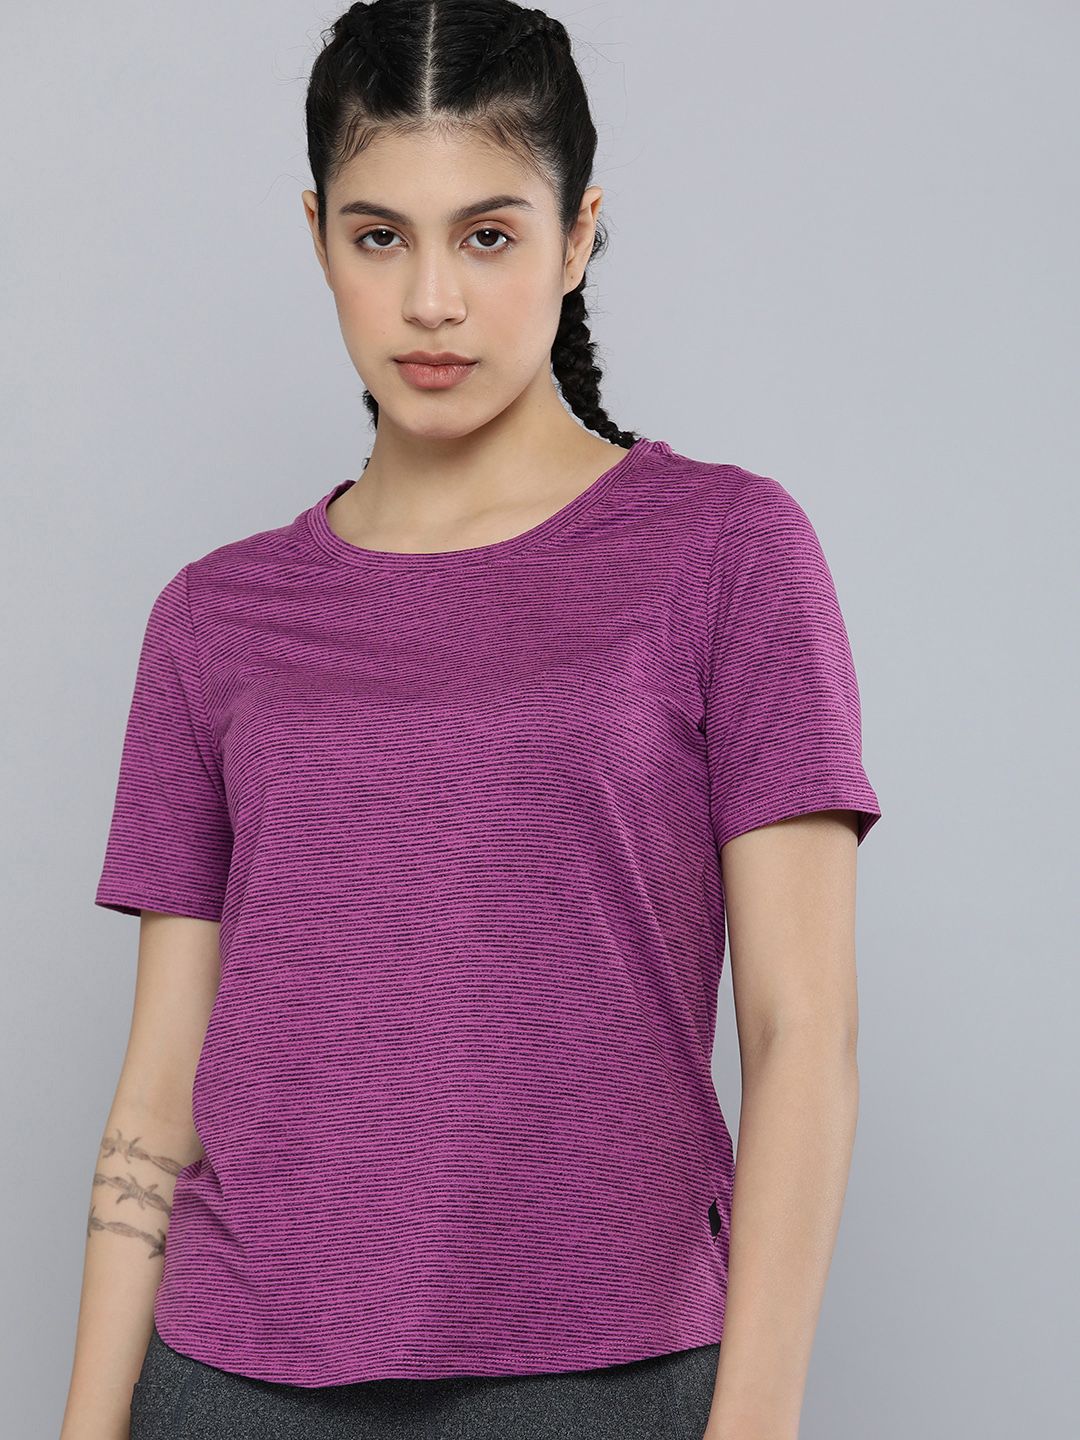 Skechers Women Purple & Black Harmony Stripe T-shirt Price in India